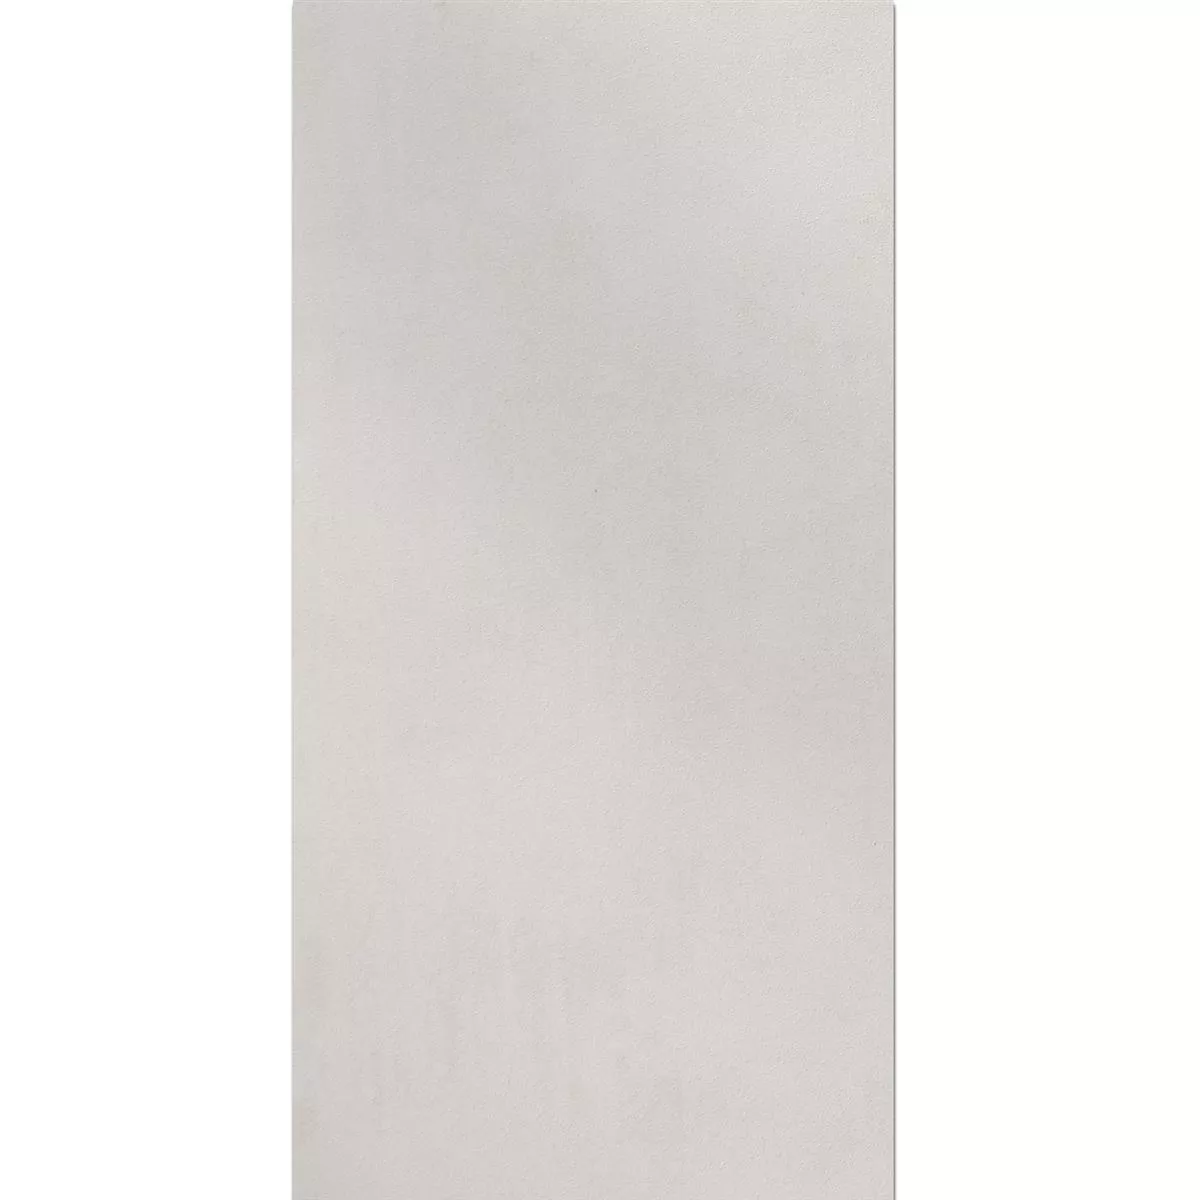 Sample Terrastegels Zeus Beton Optic White 60x90cm